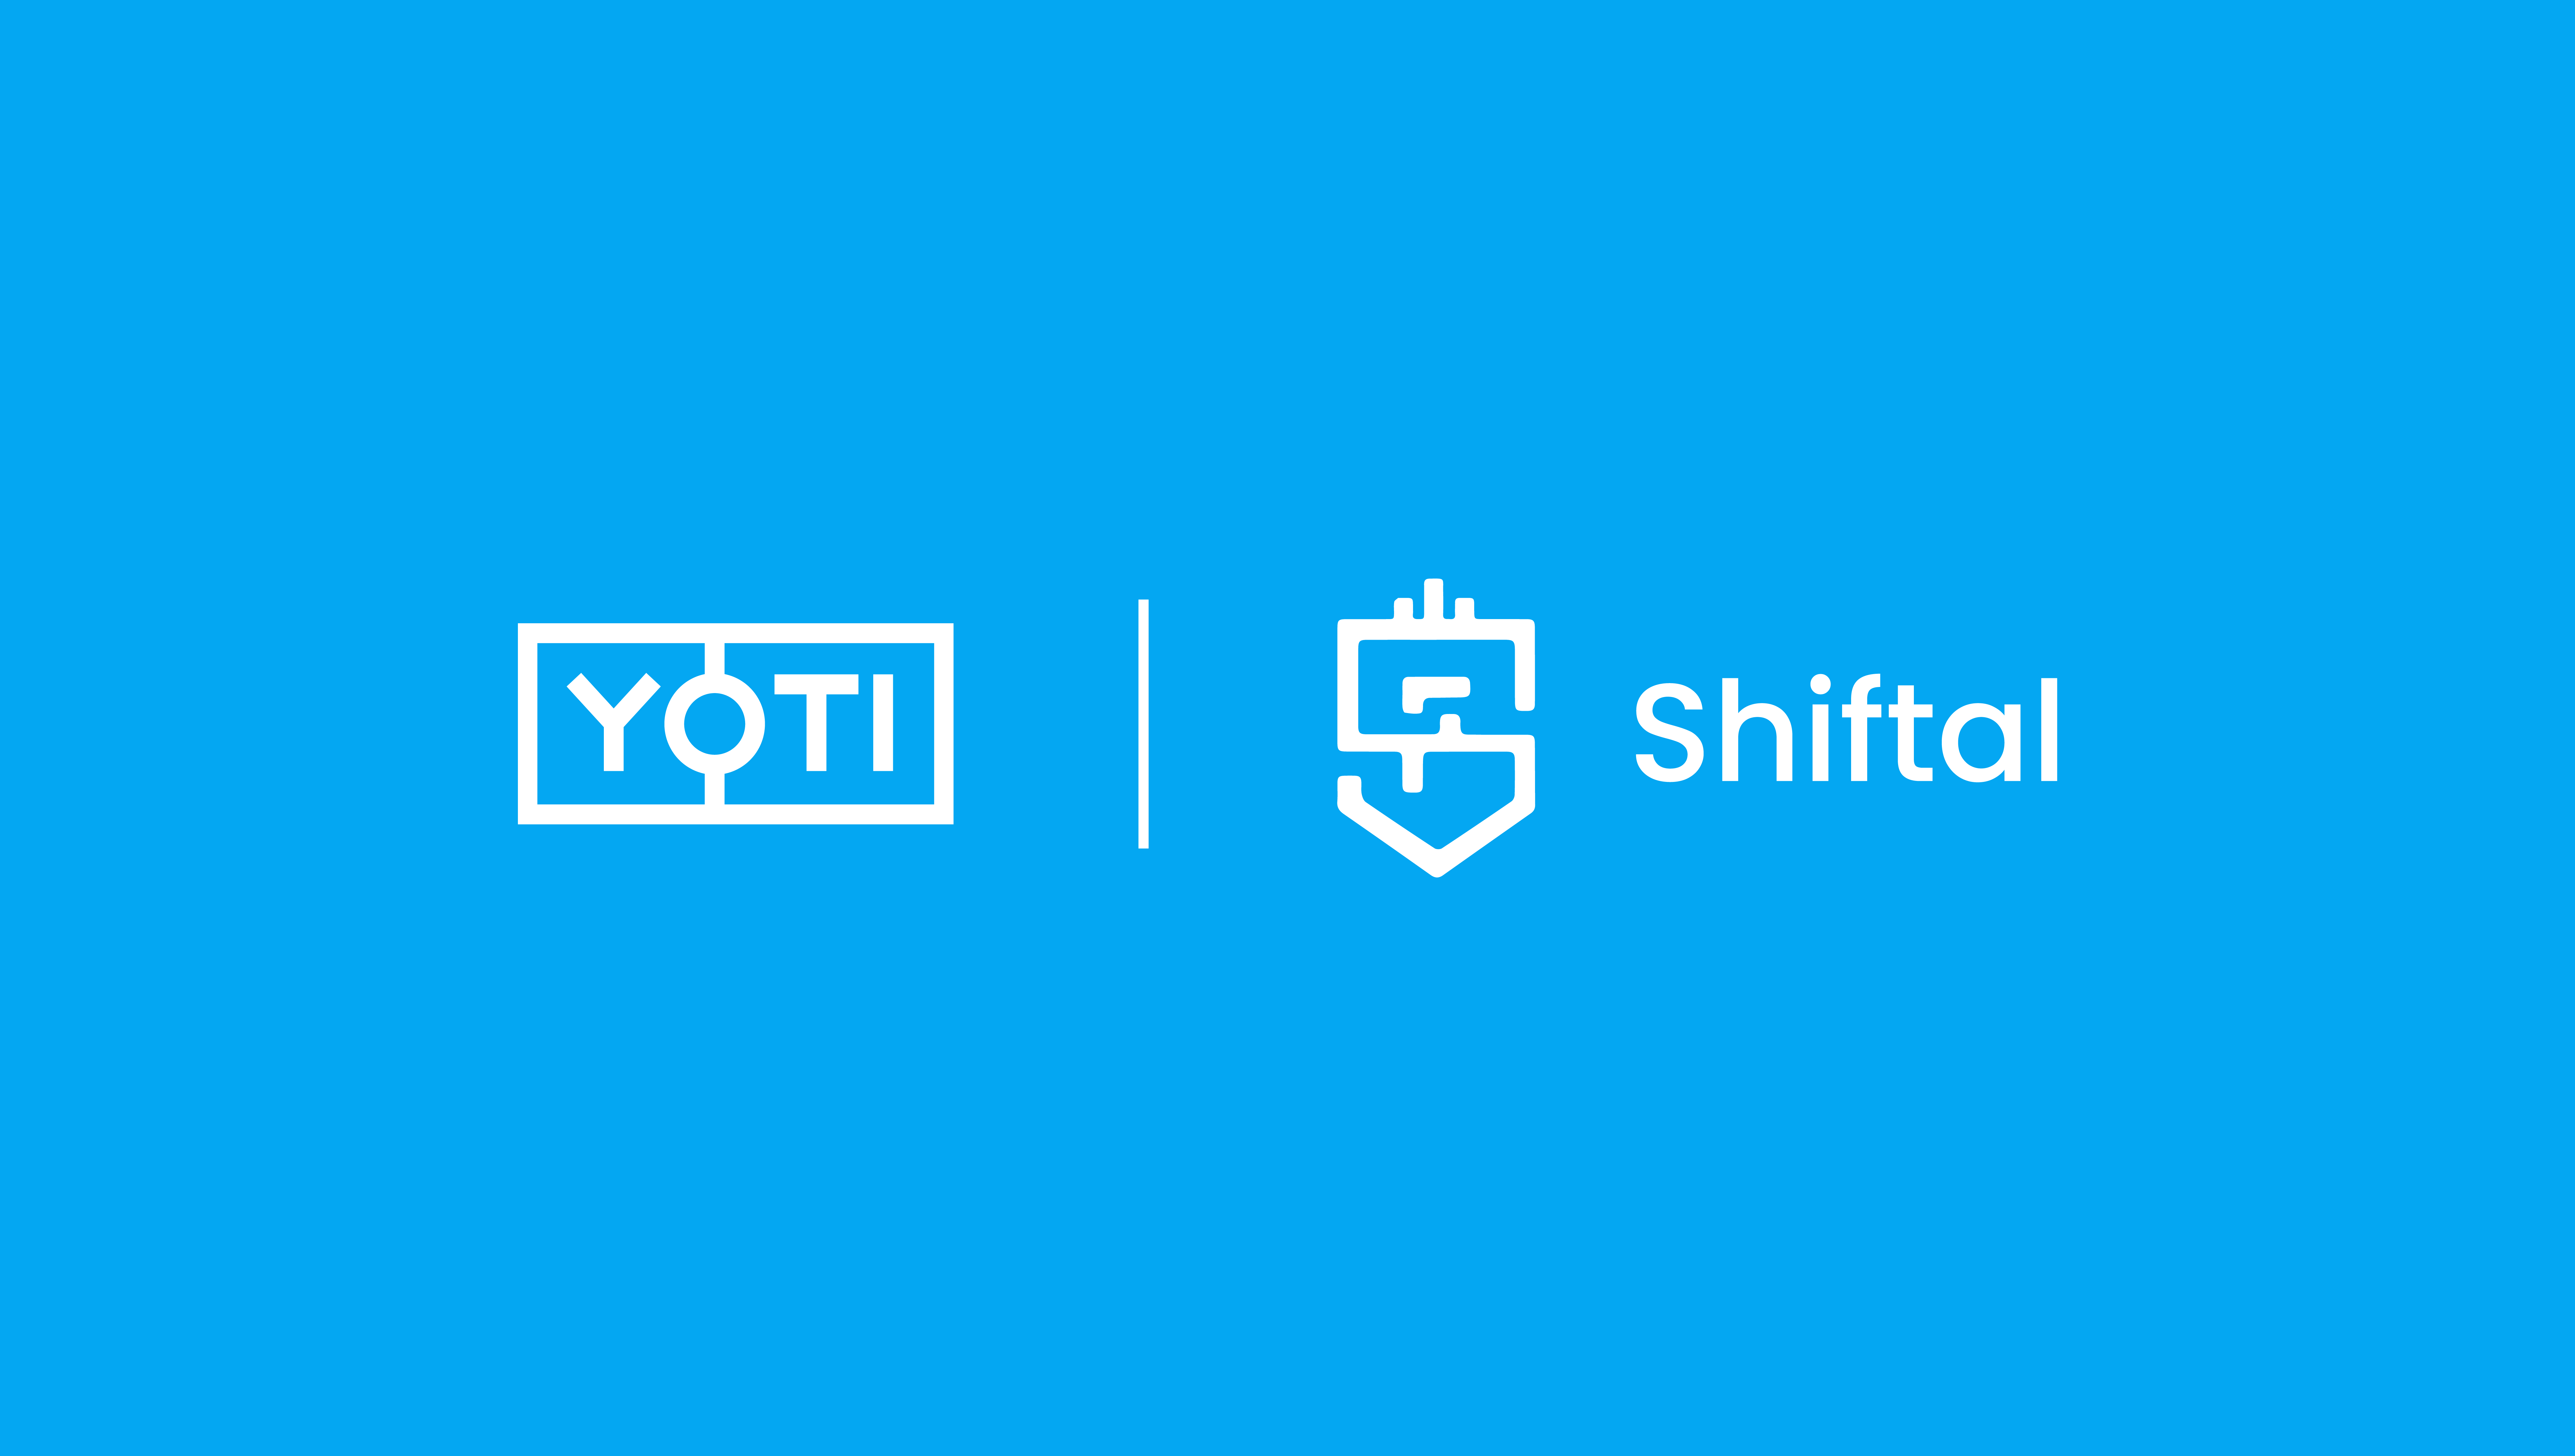 Yoti and Shiftal logos presented together